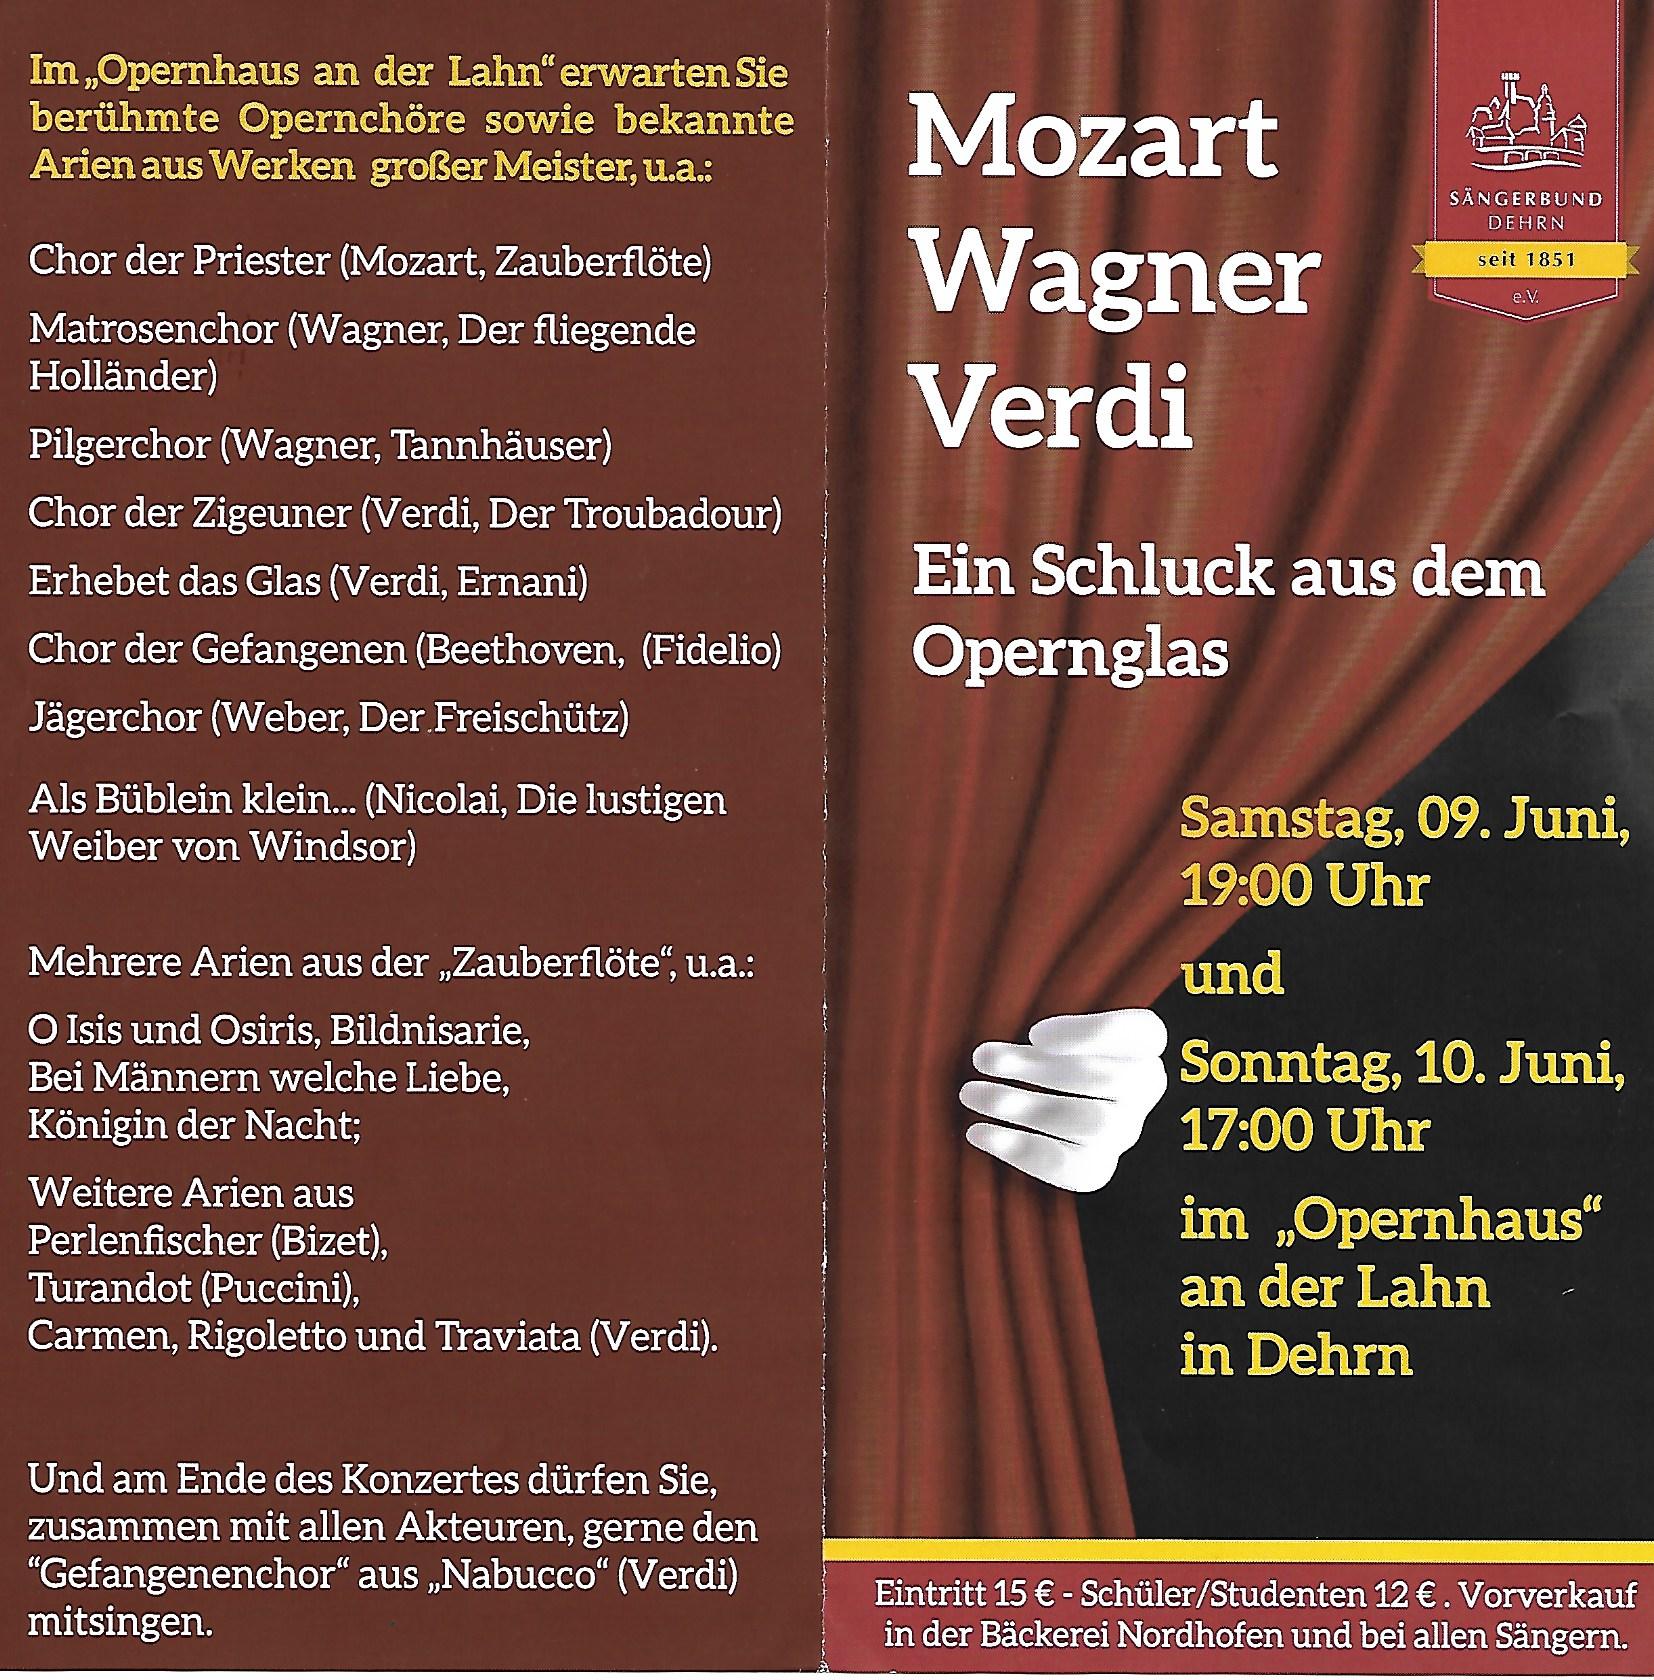 MGV Sängerbund Dehrn Mozart Wagner Verdi 2018.06.09